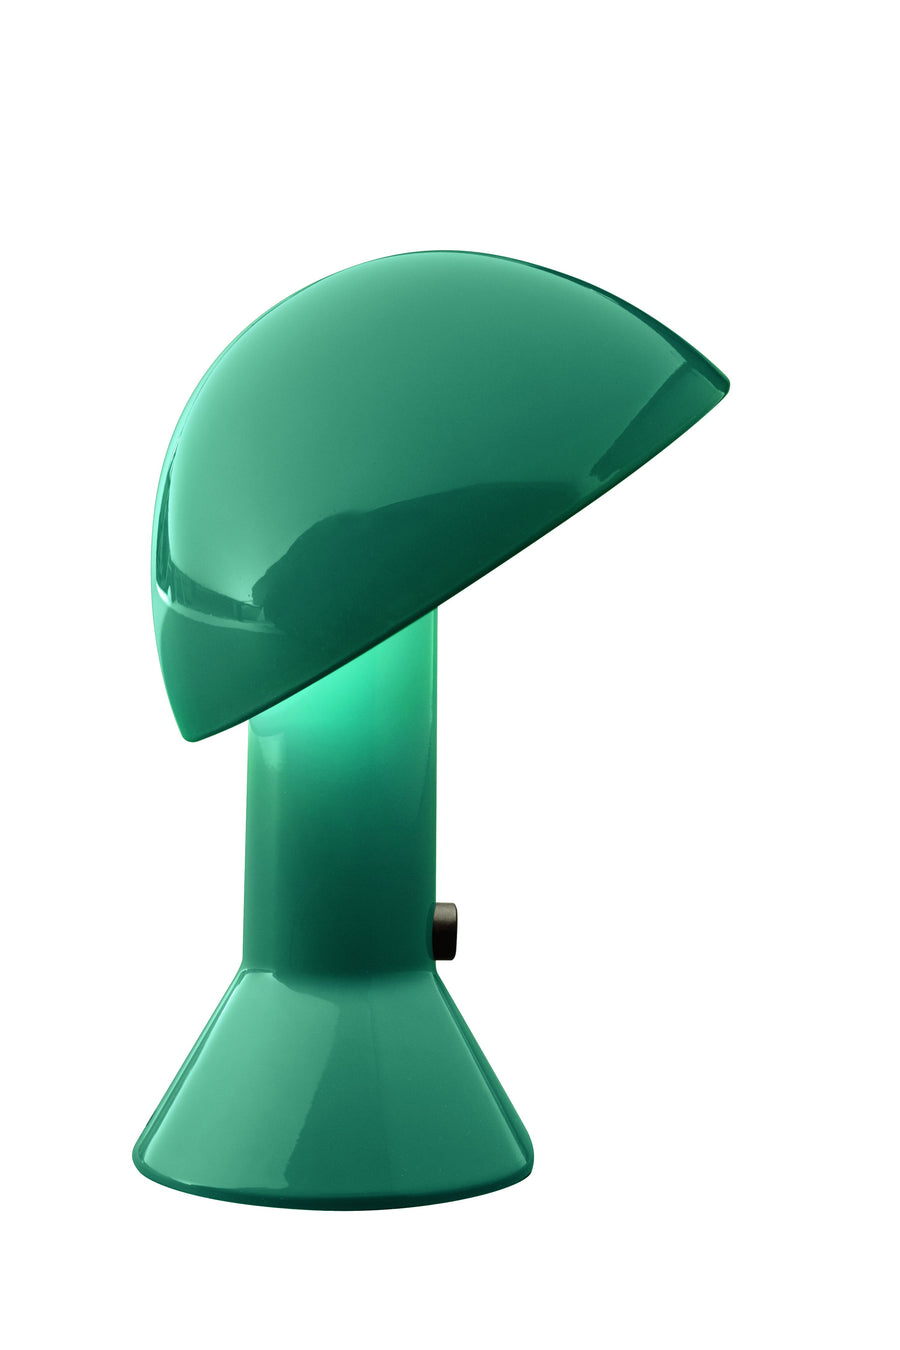 Elmetto Table Lamp in green